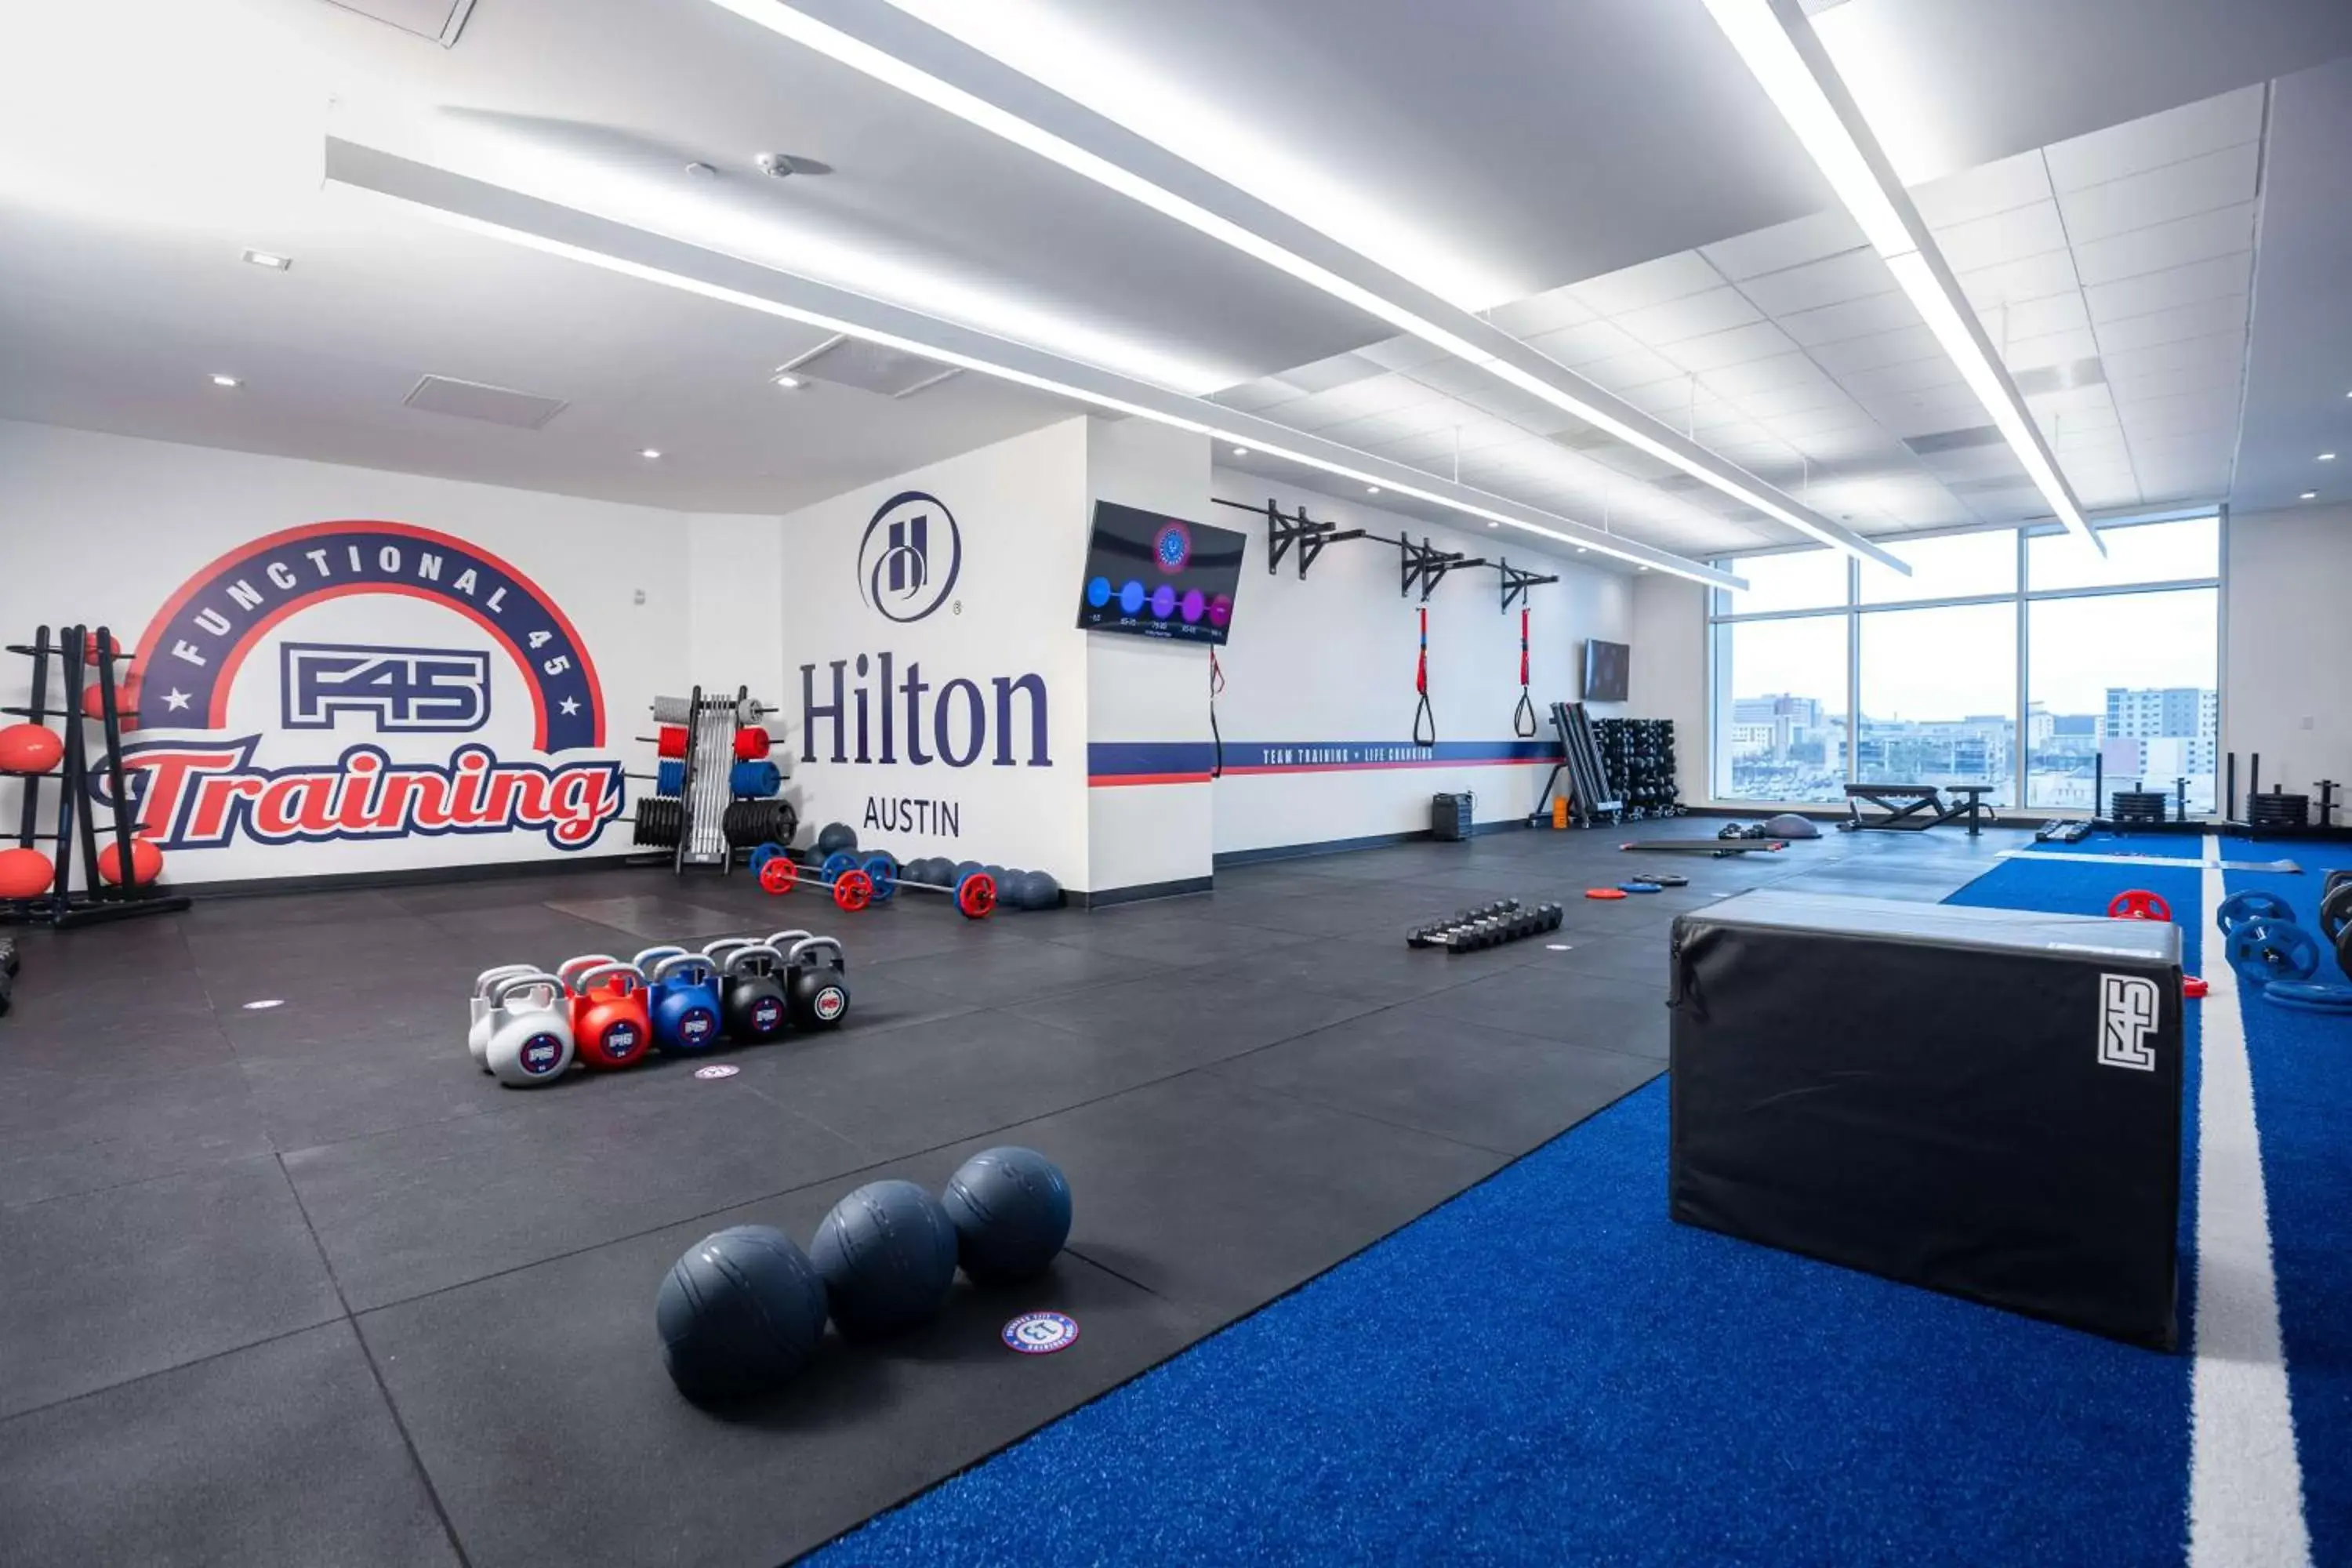 Fitness centre/facilities in Hilton Austin